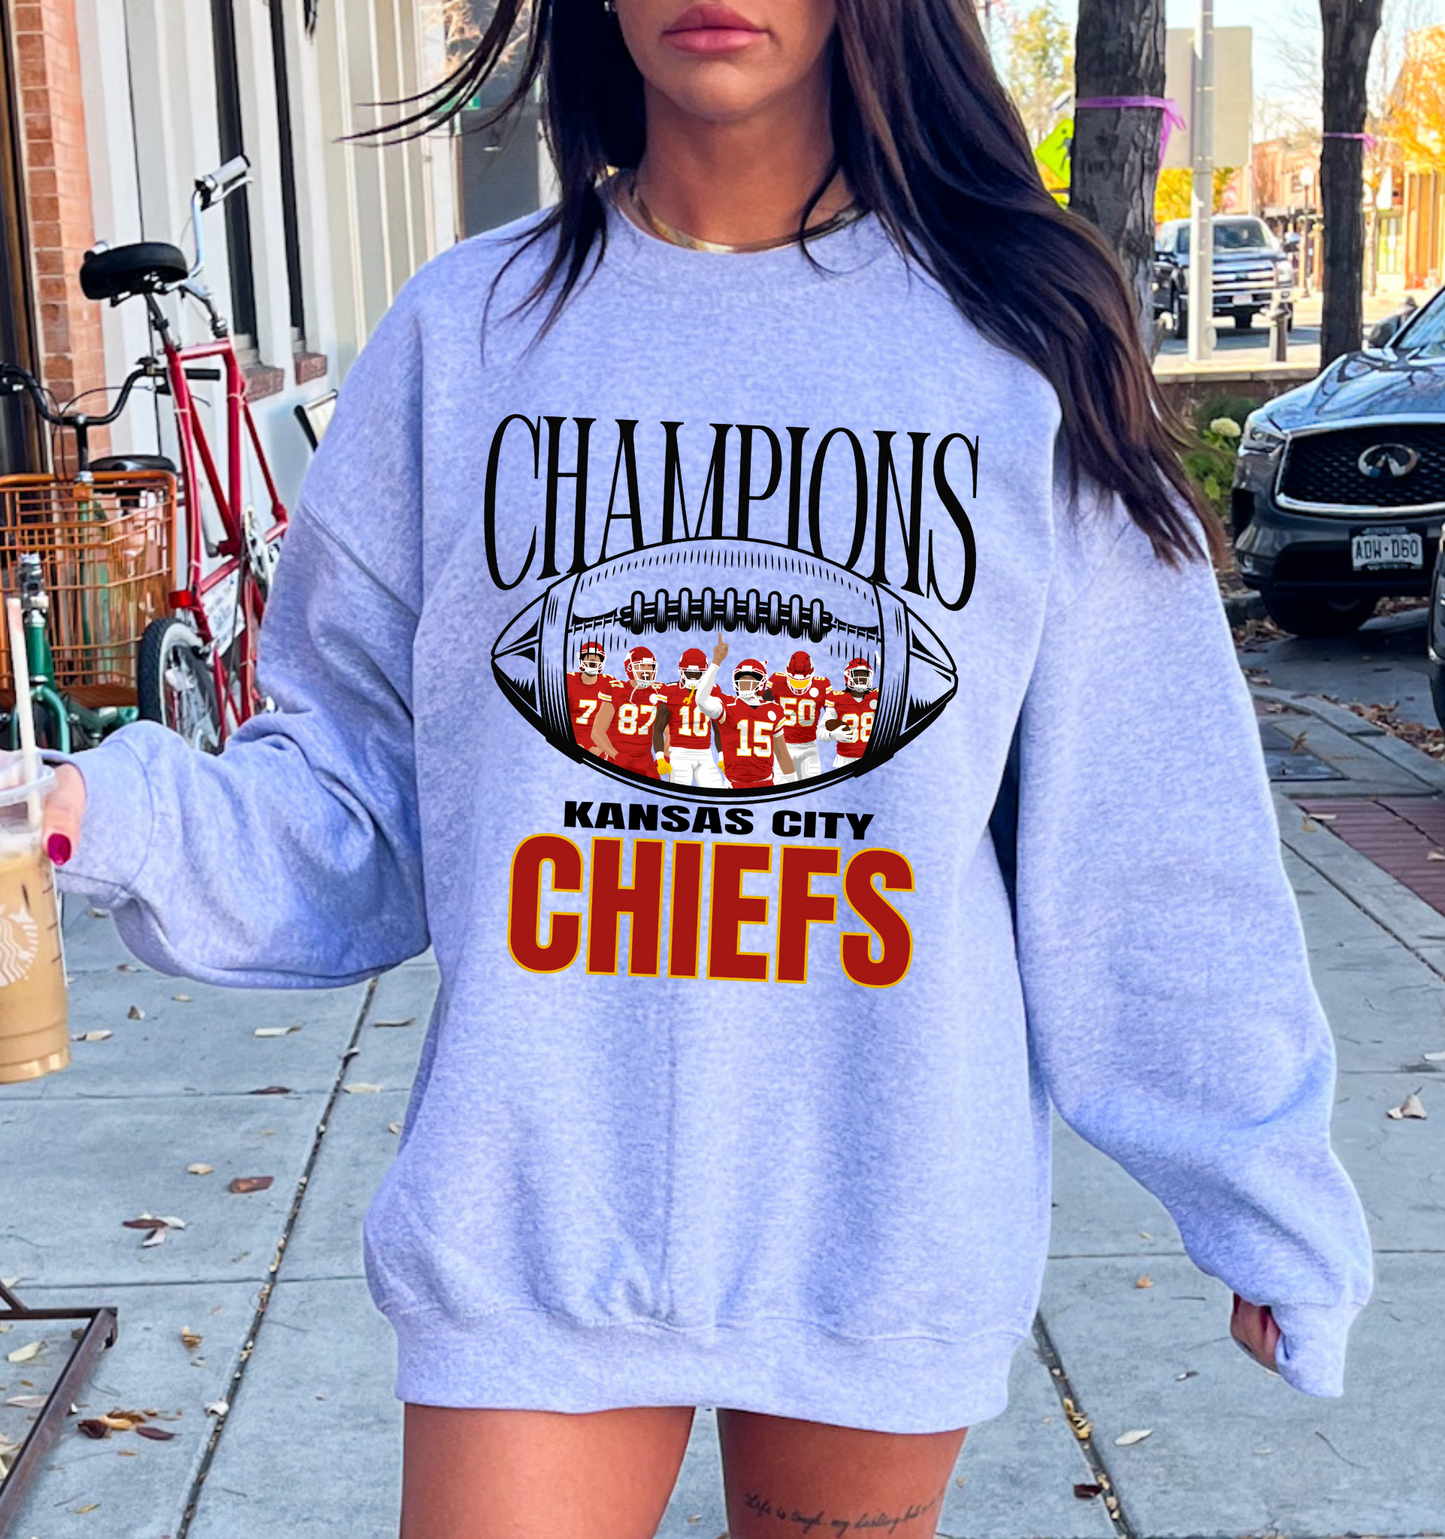 Kansas City Champions Adult Sweatshirt